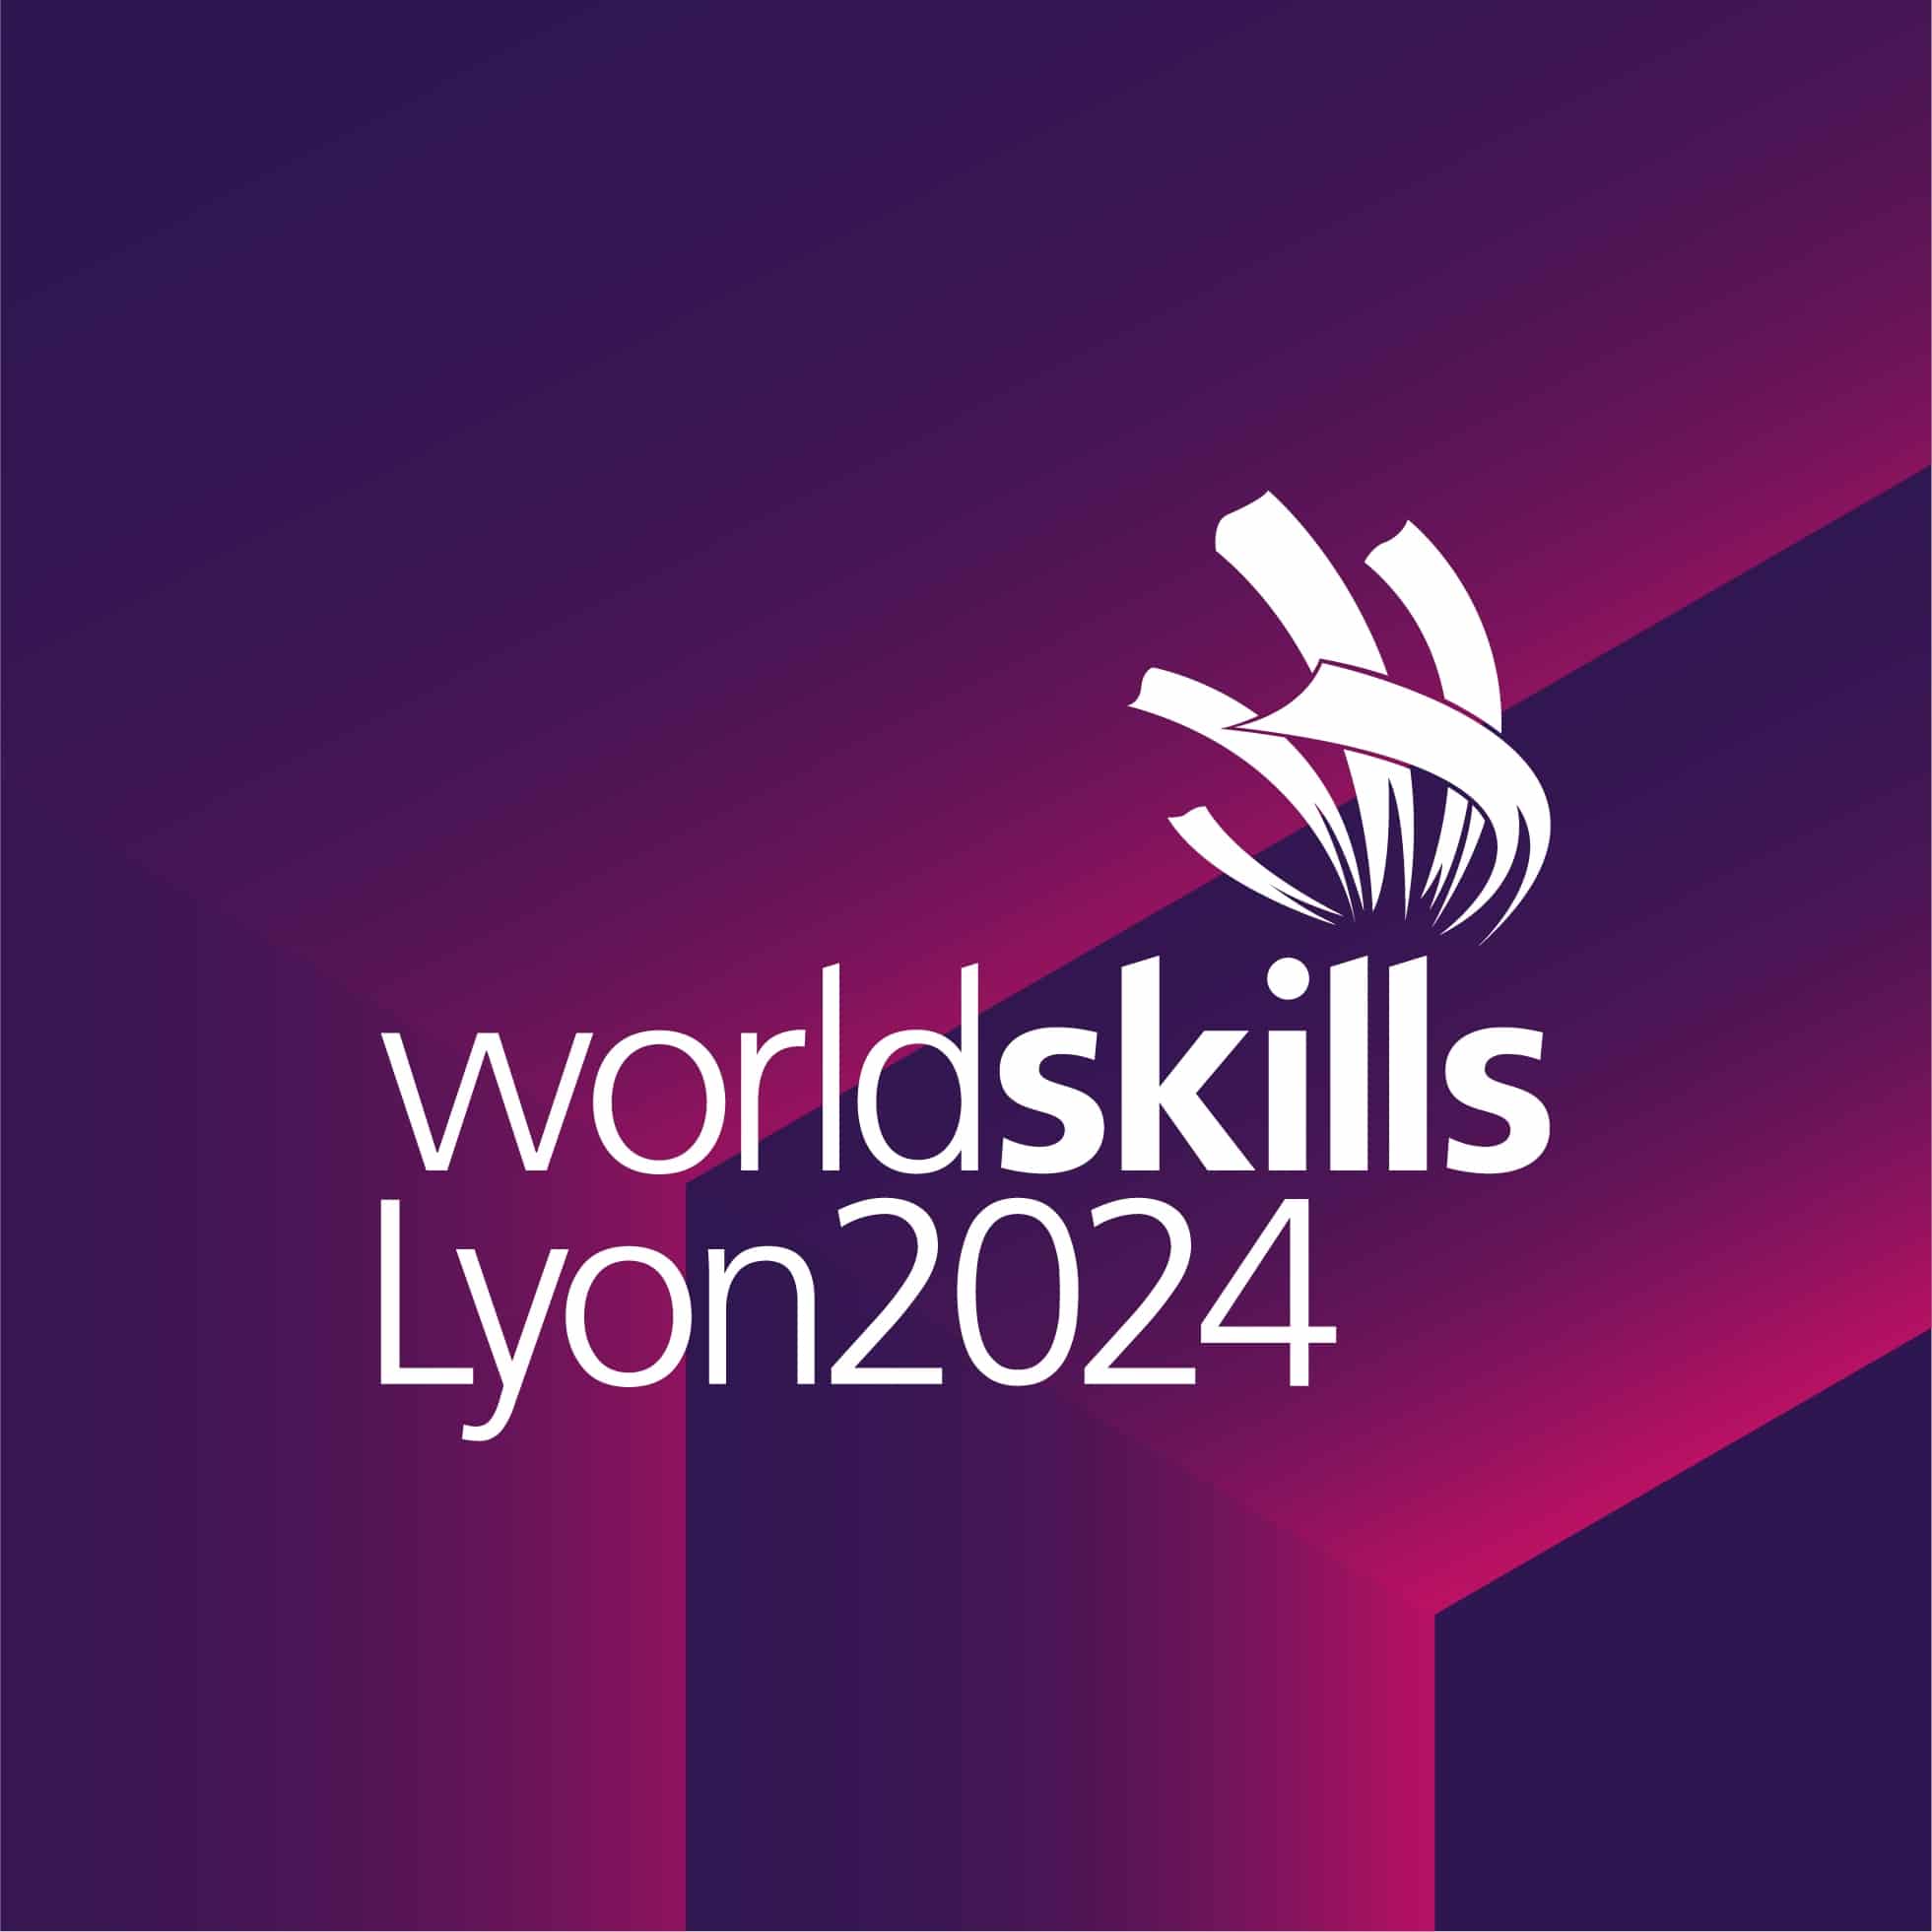 Compétition mondiale Worldskills Lyon 2024 - worldskills